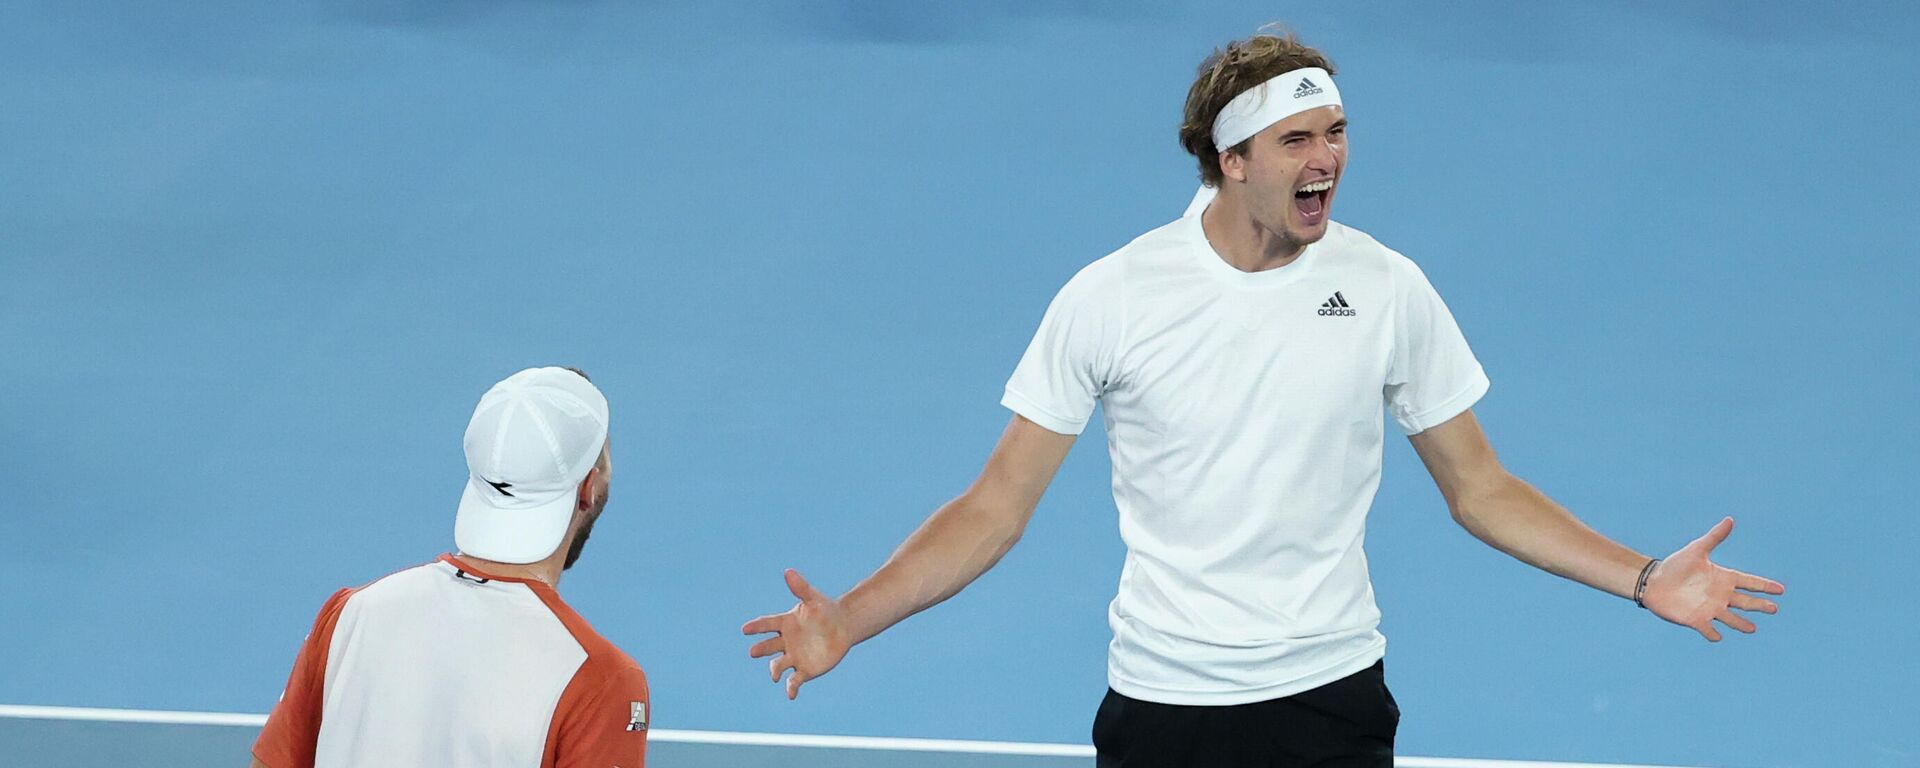 Jan-Lenard Štruf i Aleksander Zverev tokom ATP kupa protiv Srbije 2021. - Sputnik Srbija, 1920, 25.07.2021